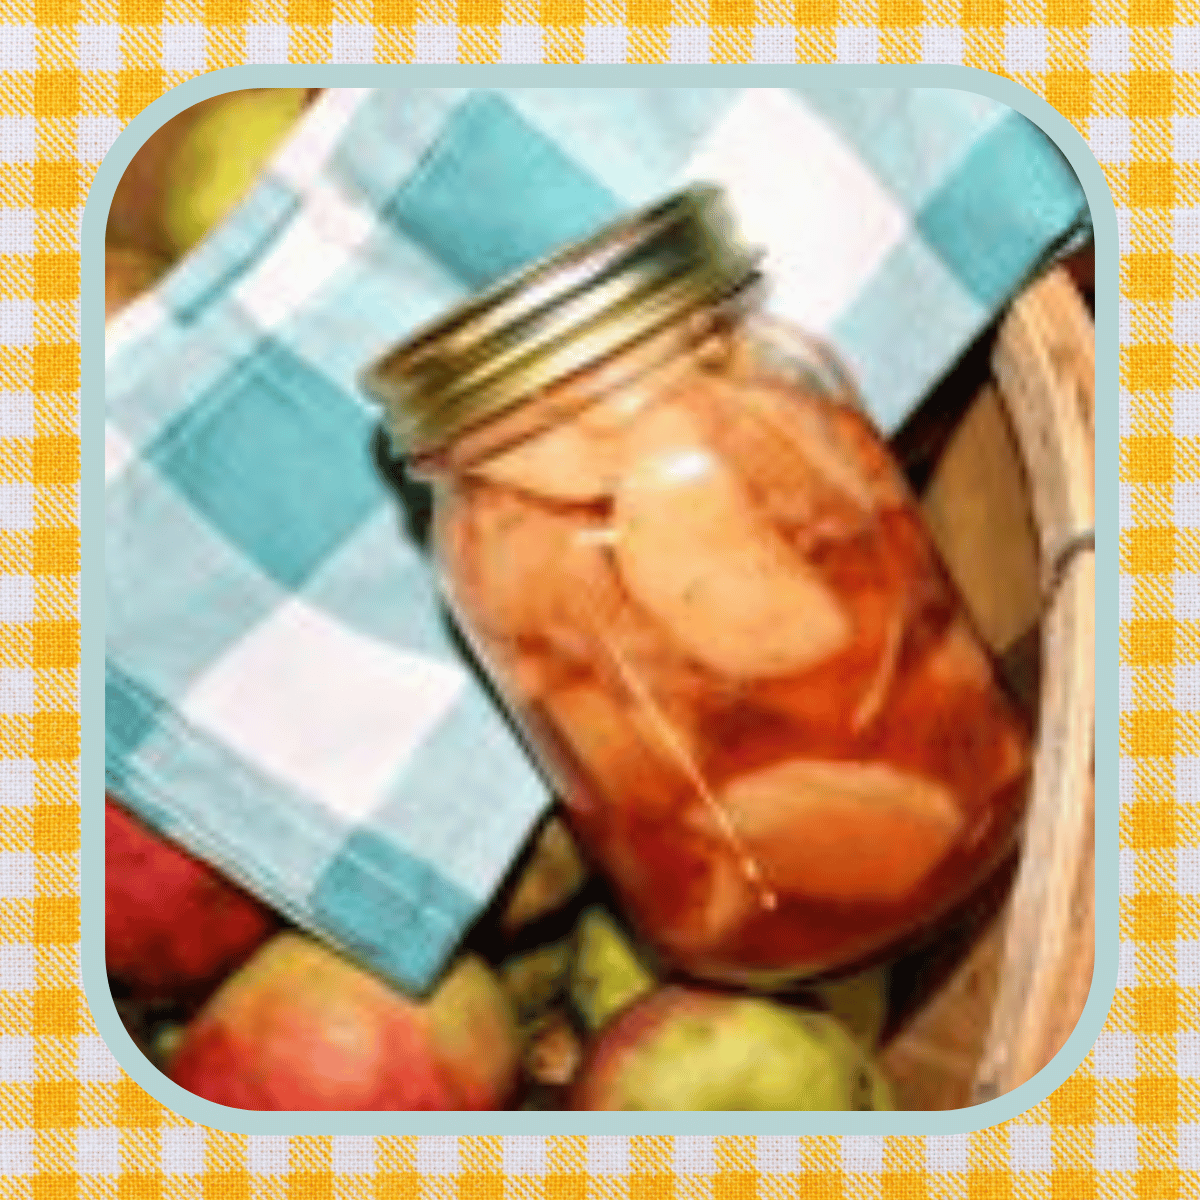 a jar of spiced apples against a blue gingham napkin